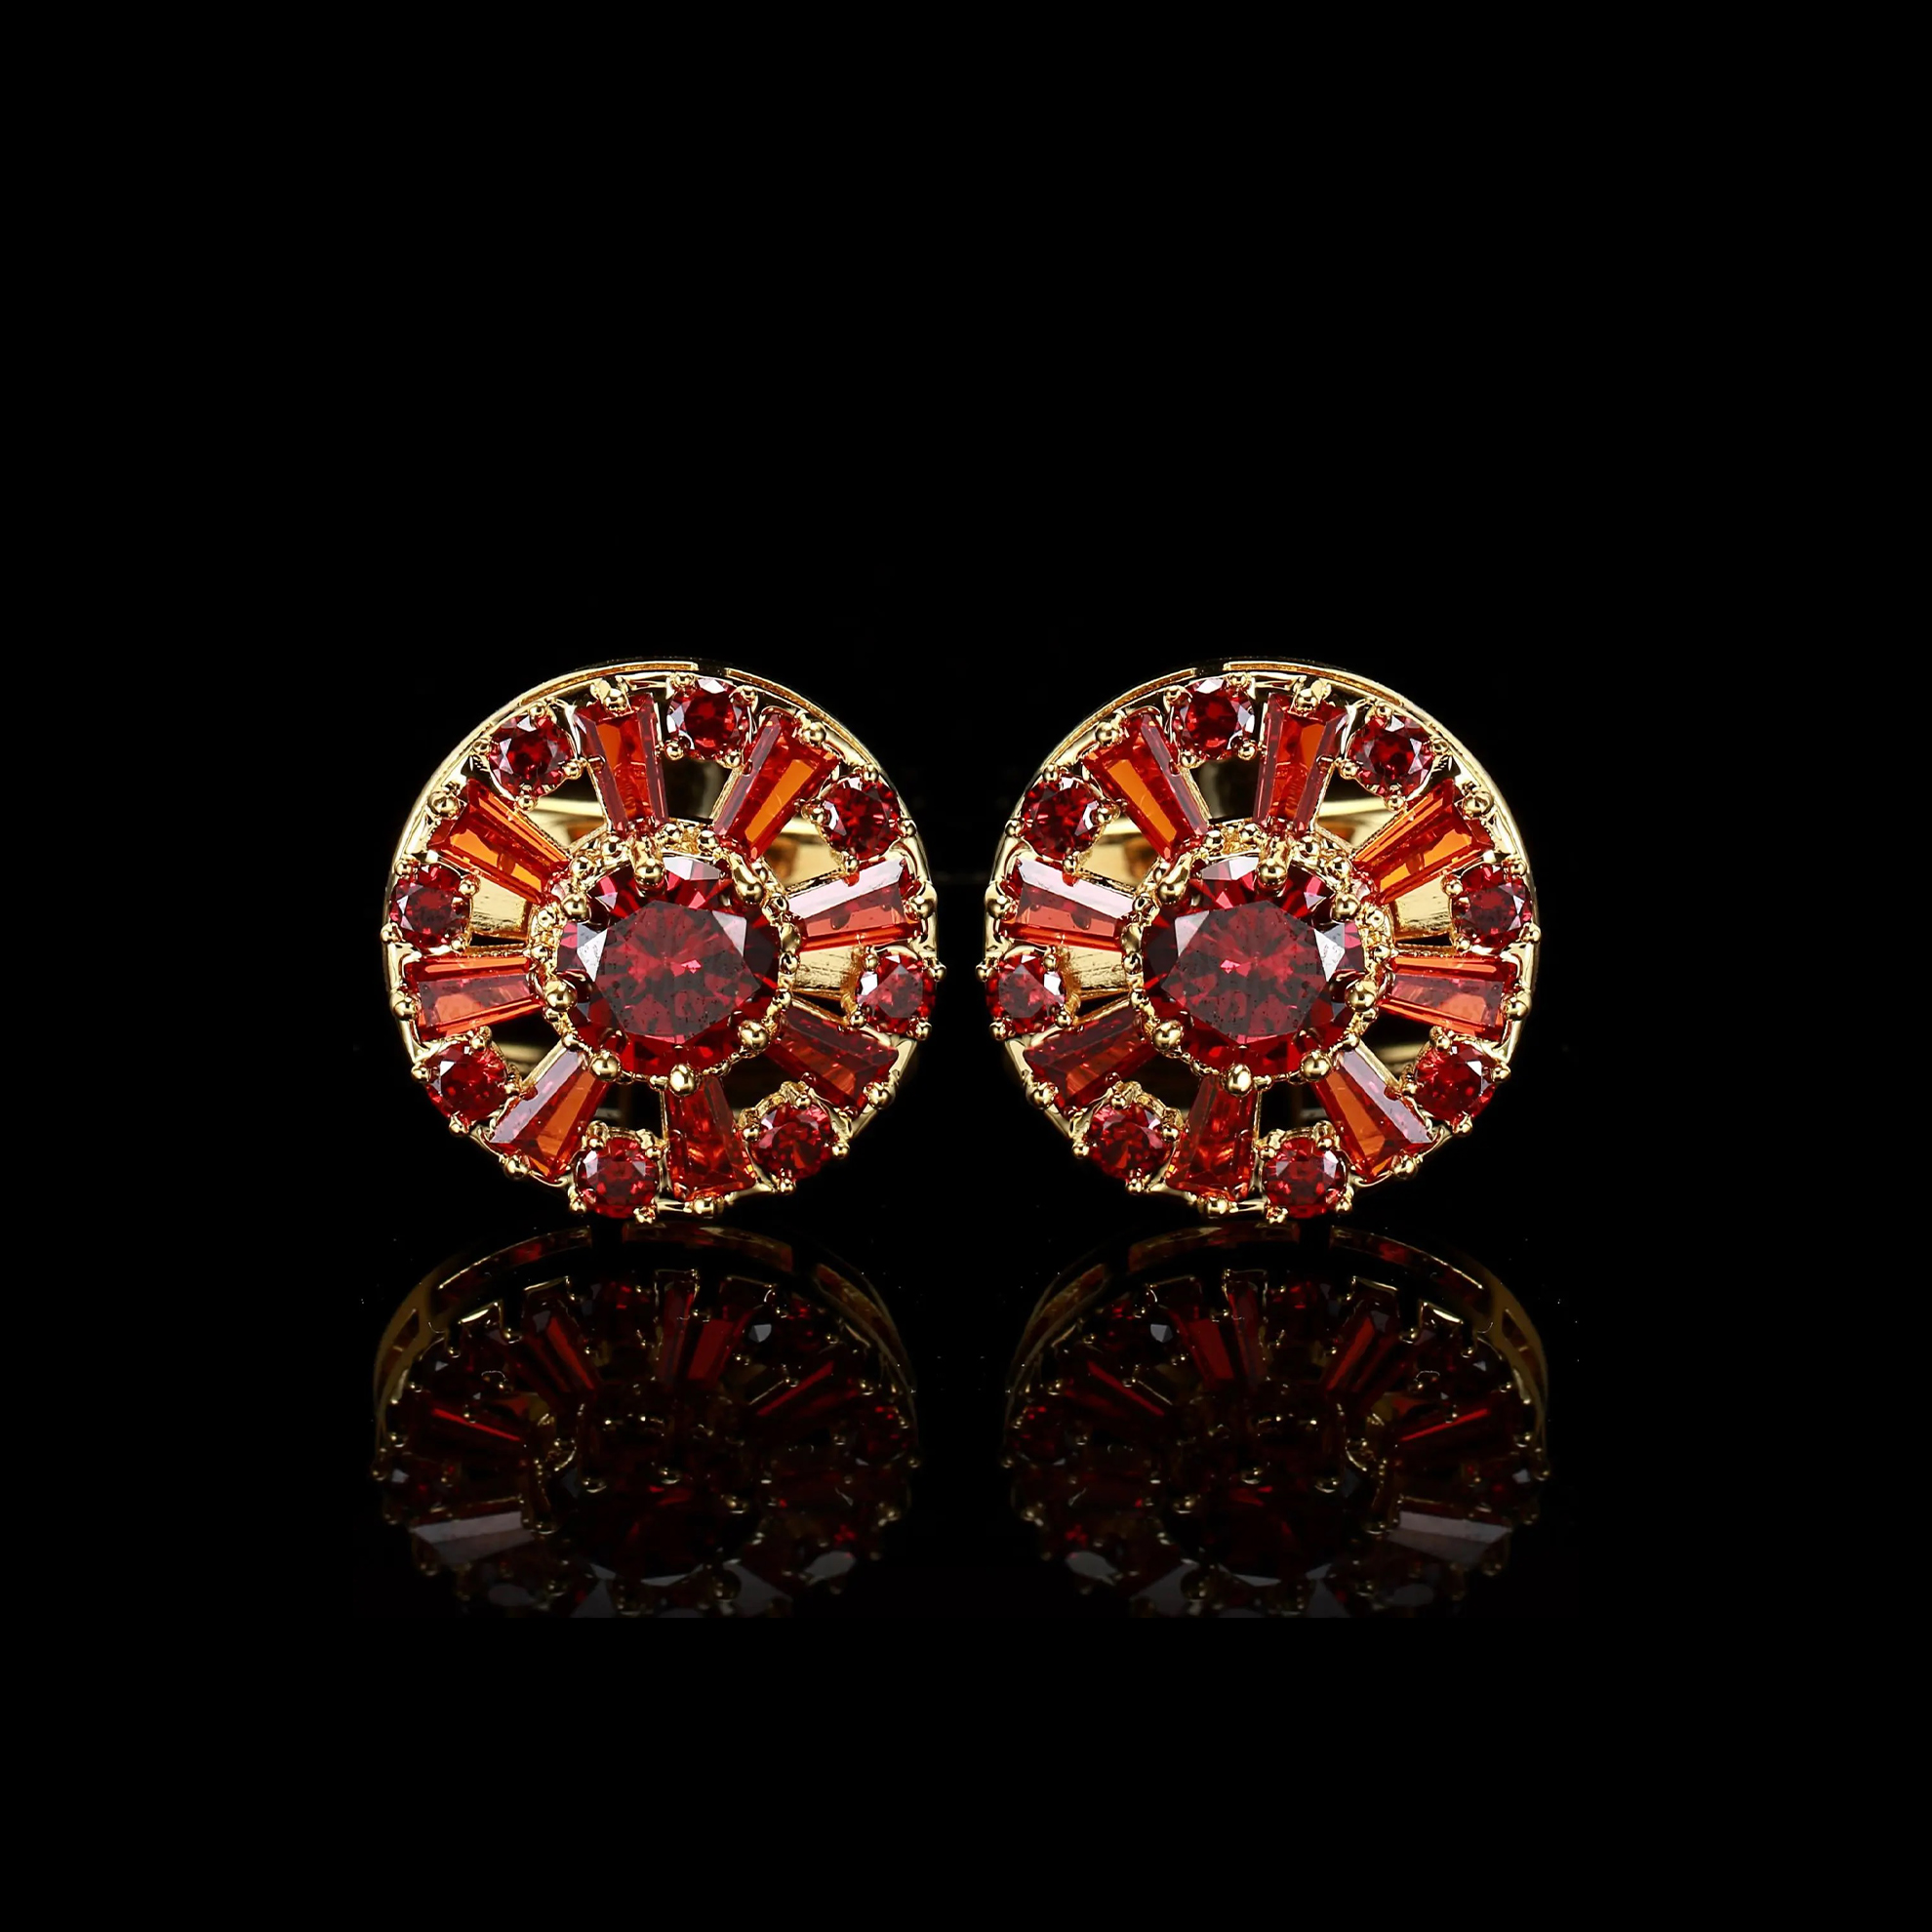 Cufflers Designer Red Round Diamond Cufflinks High-Quality Copper Crystal Free Gift Box – CU-3016-B